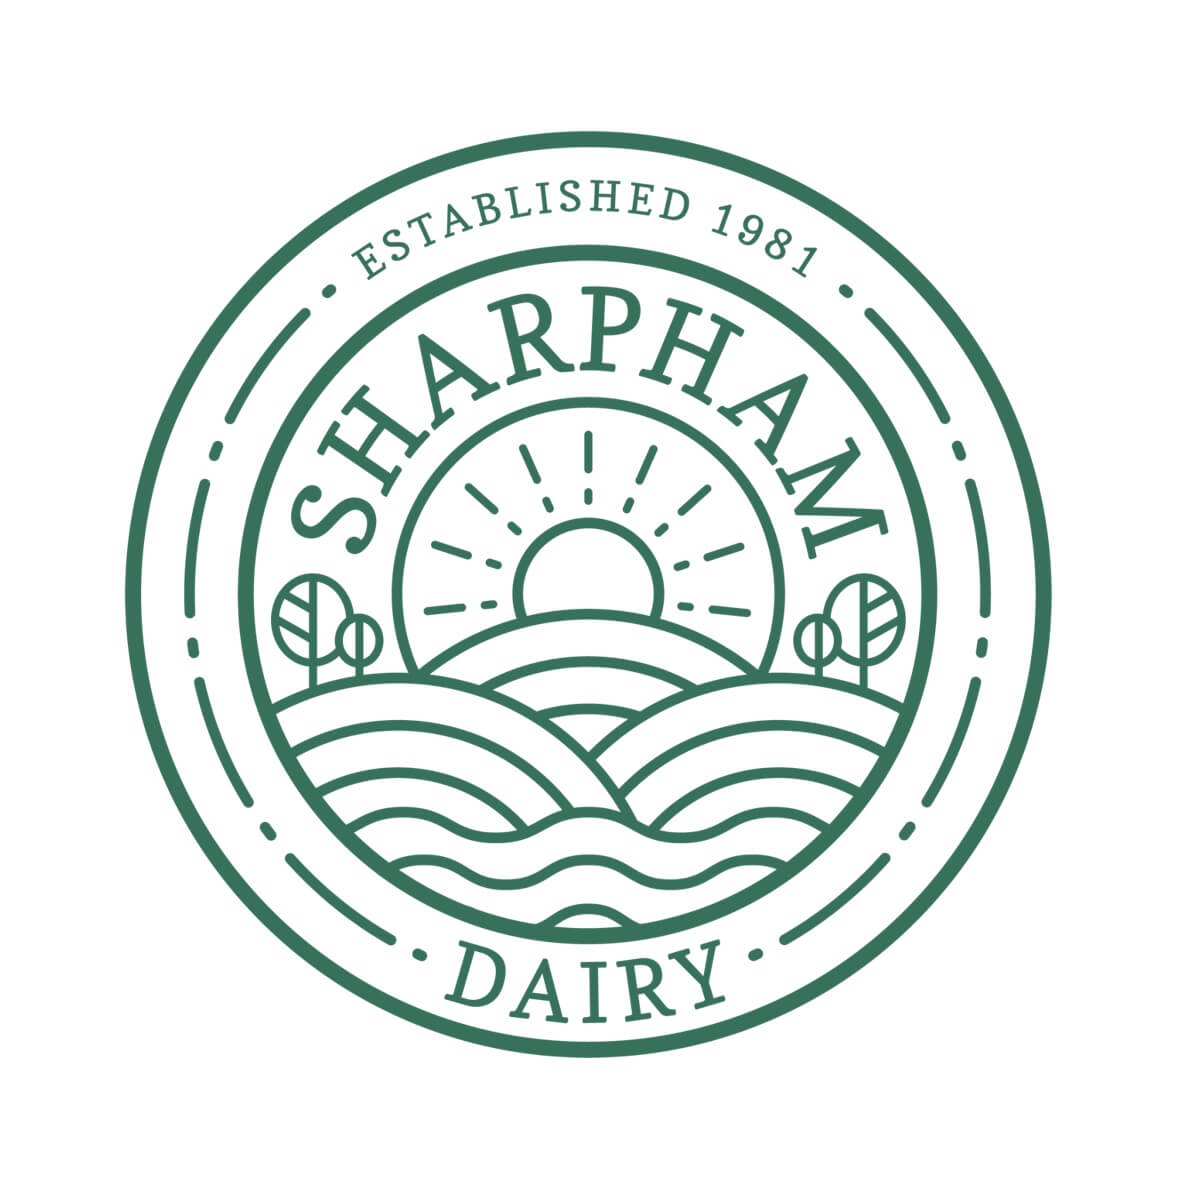 Sharpham Dairy brand logo